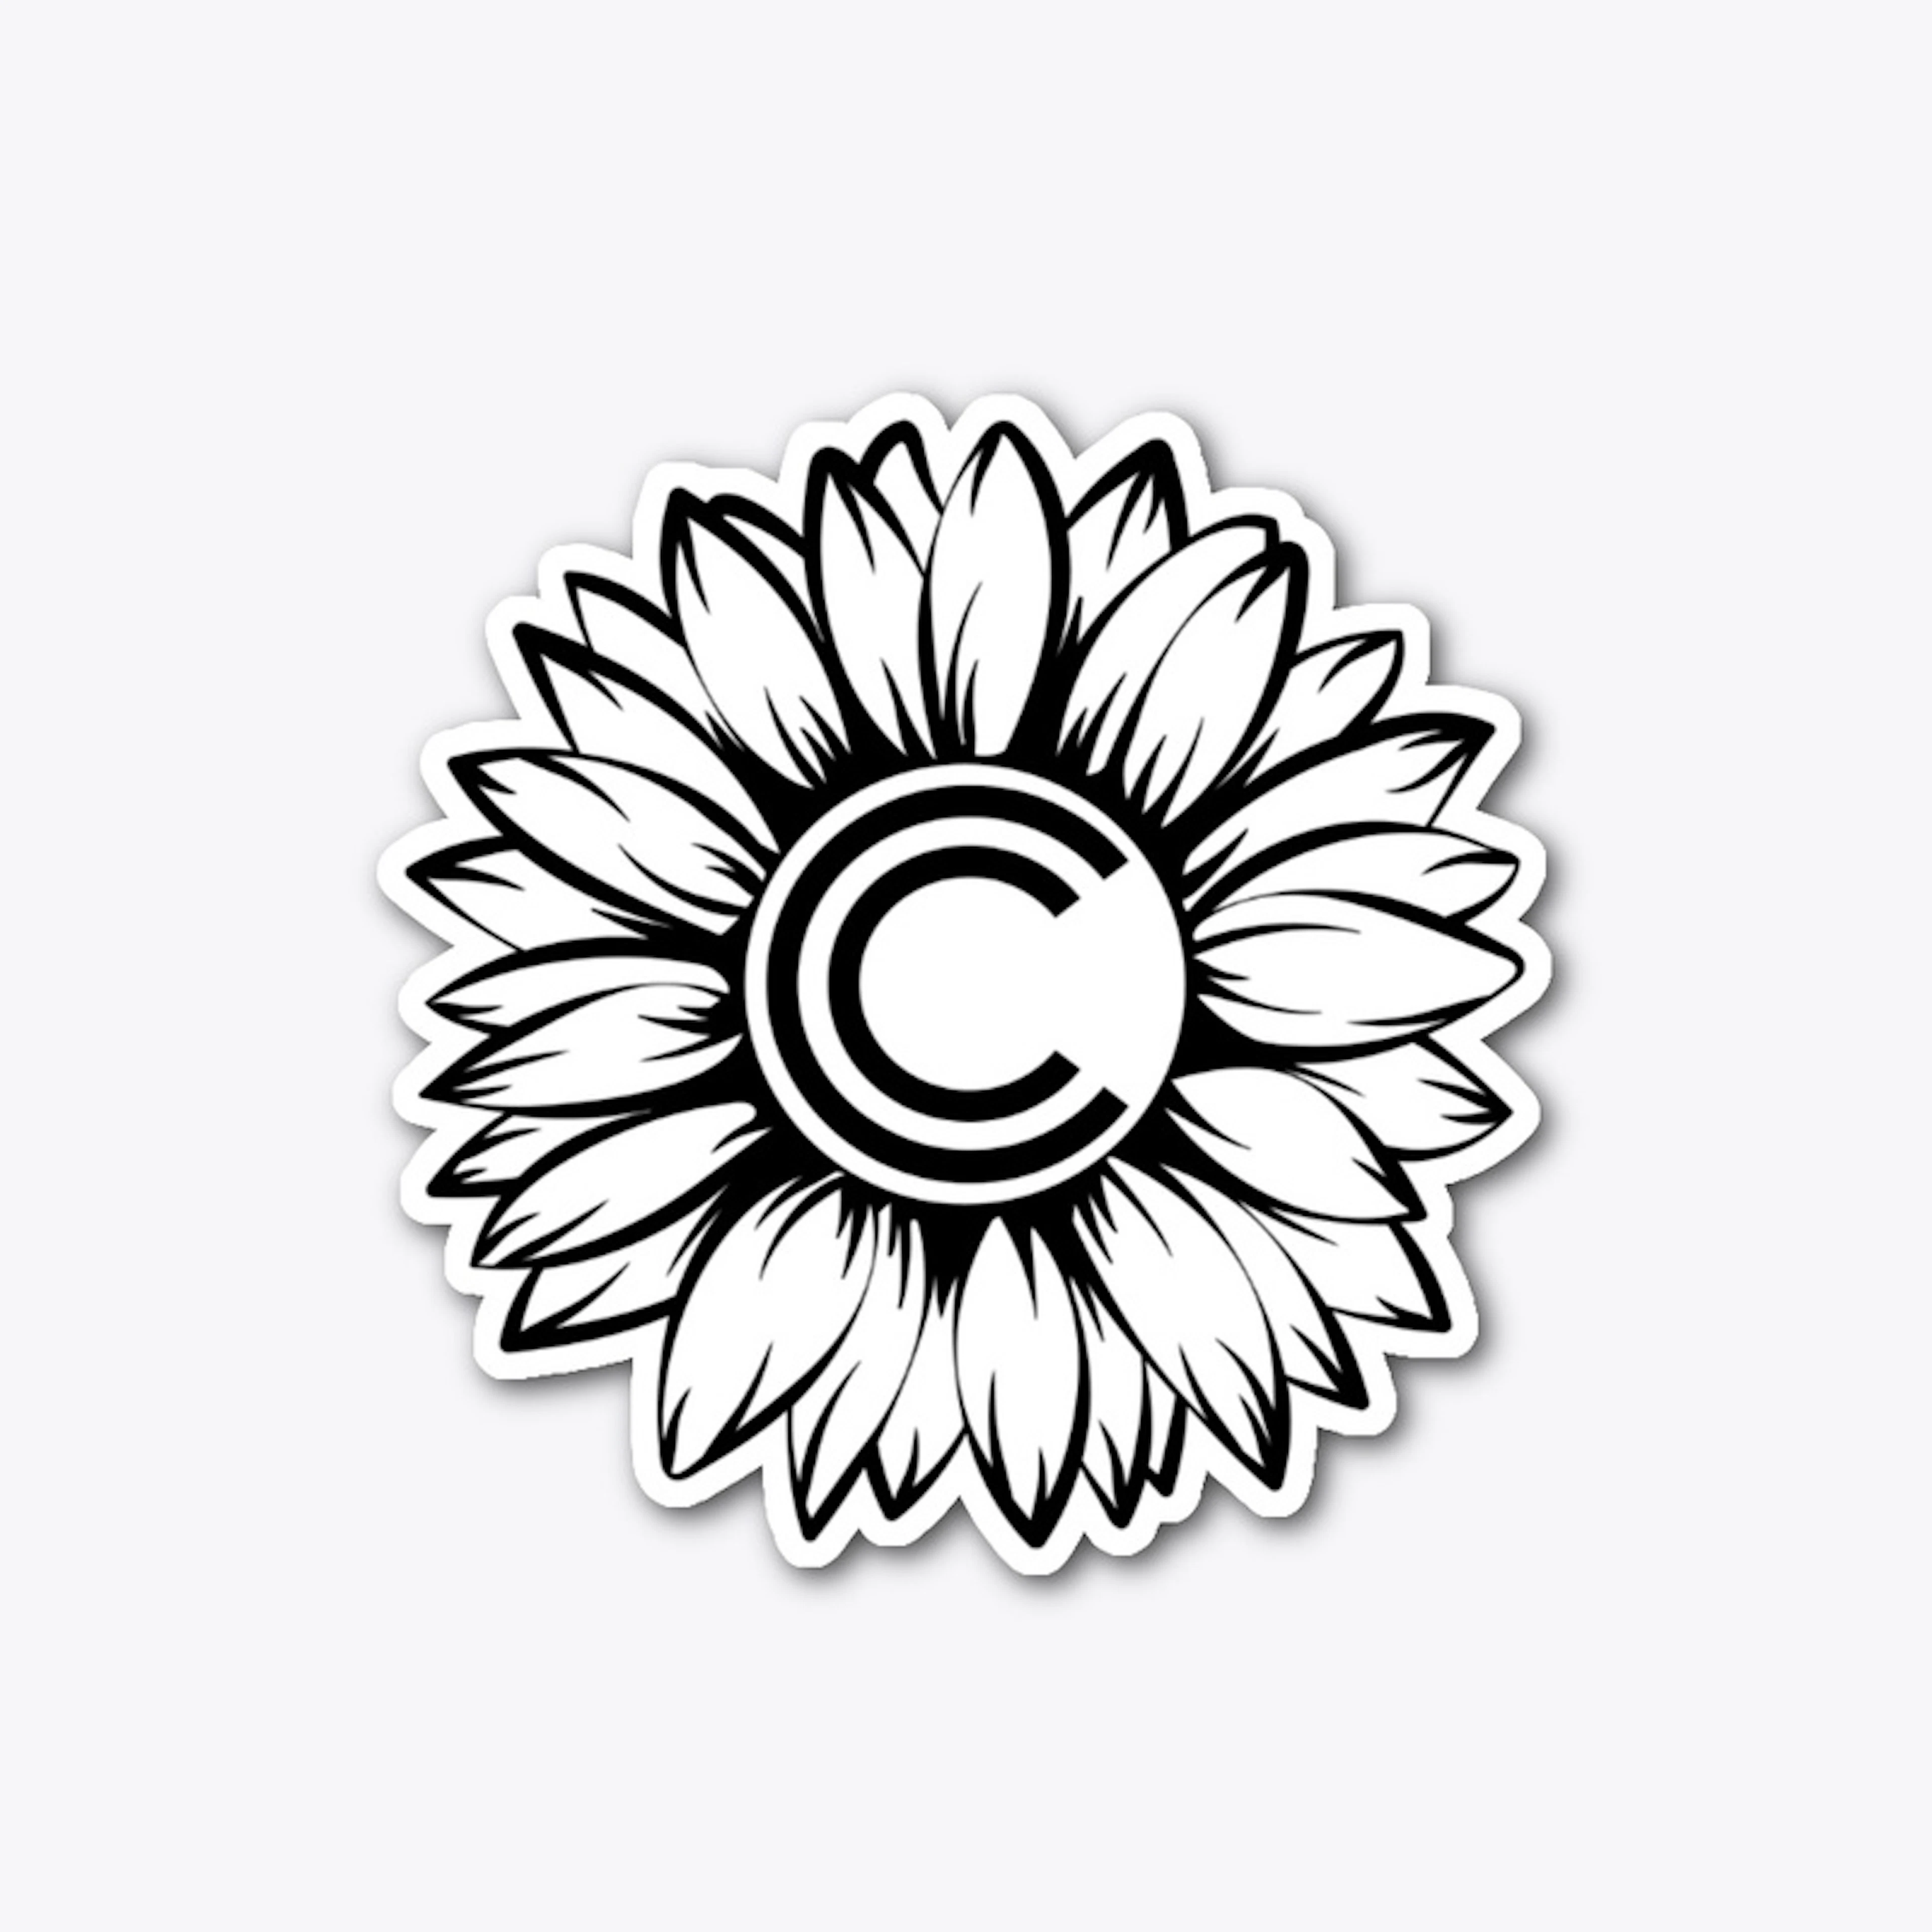 CC Sunflower